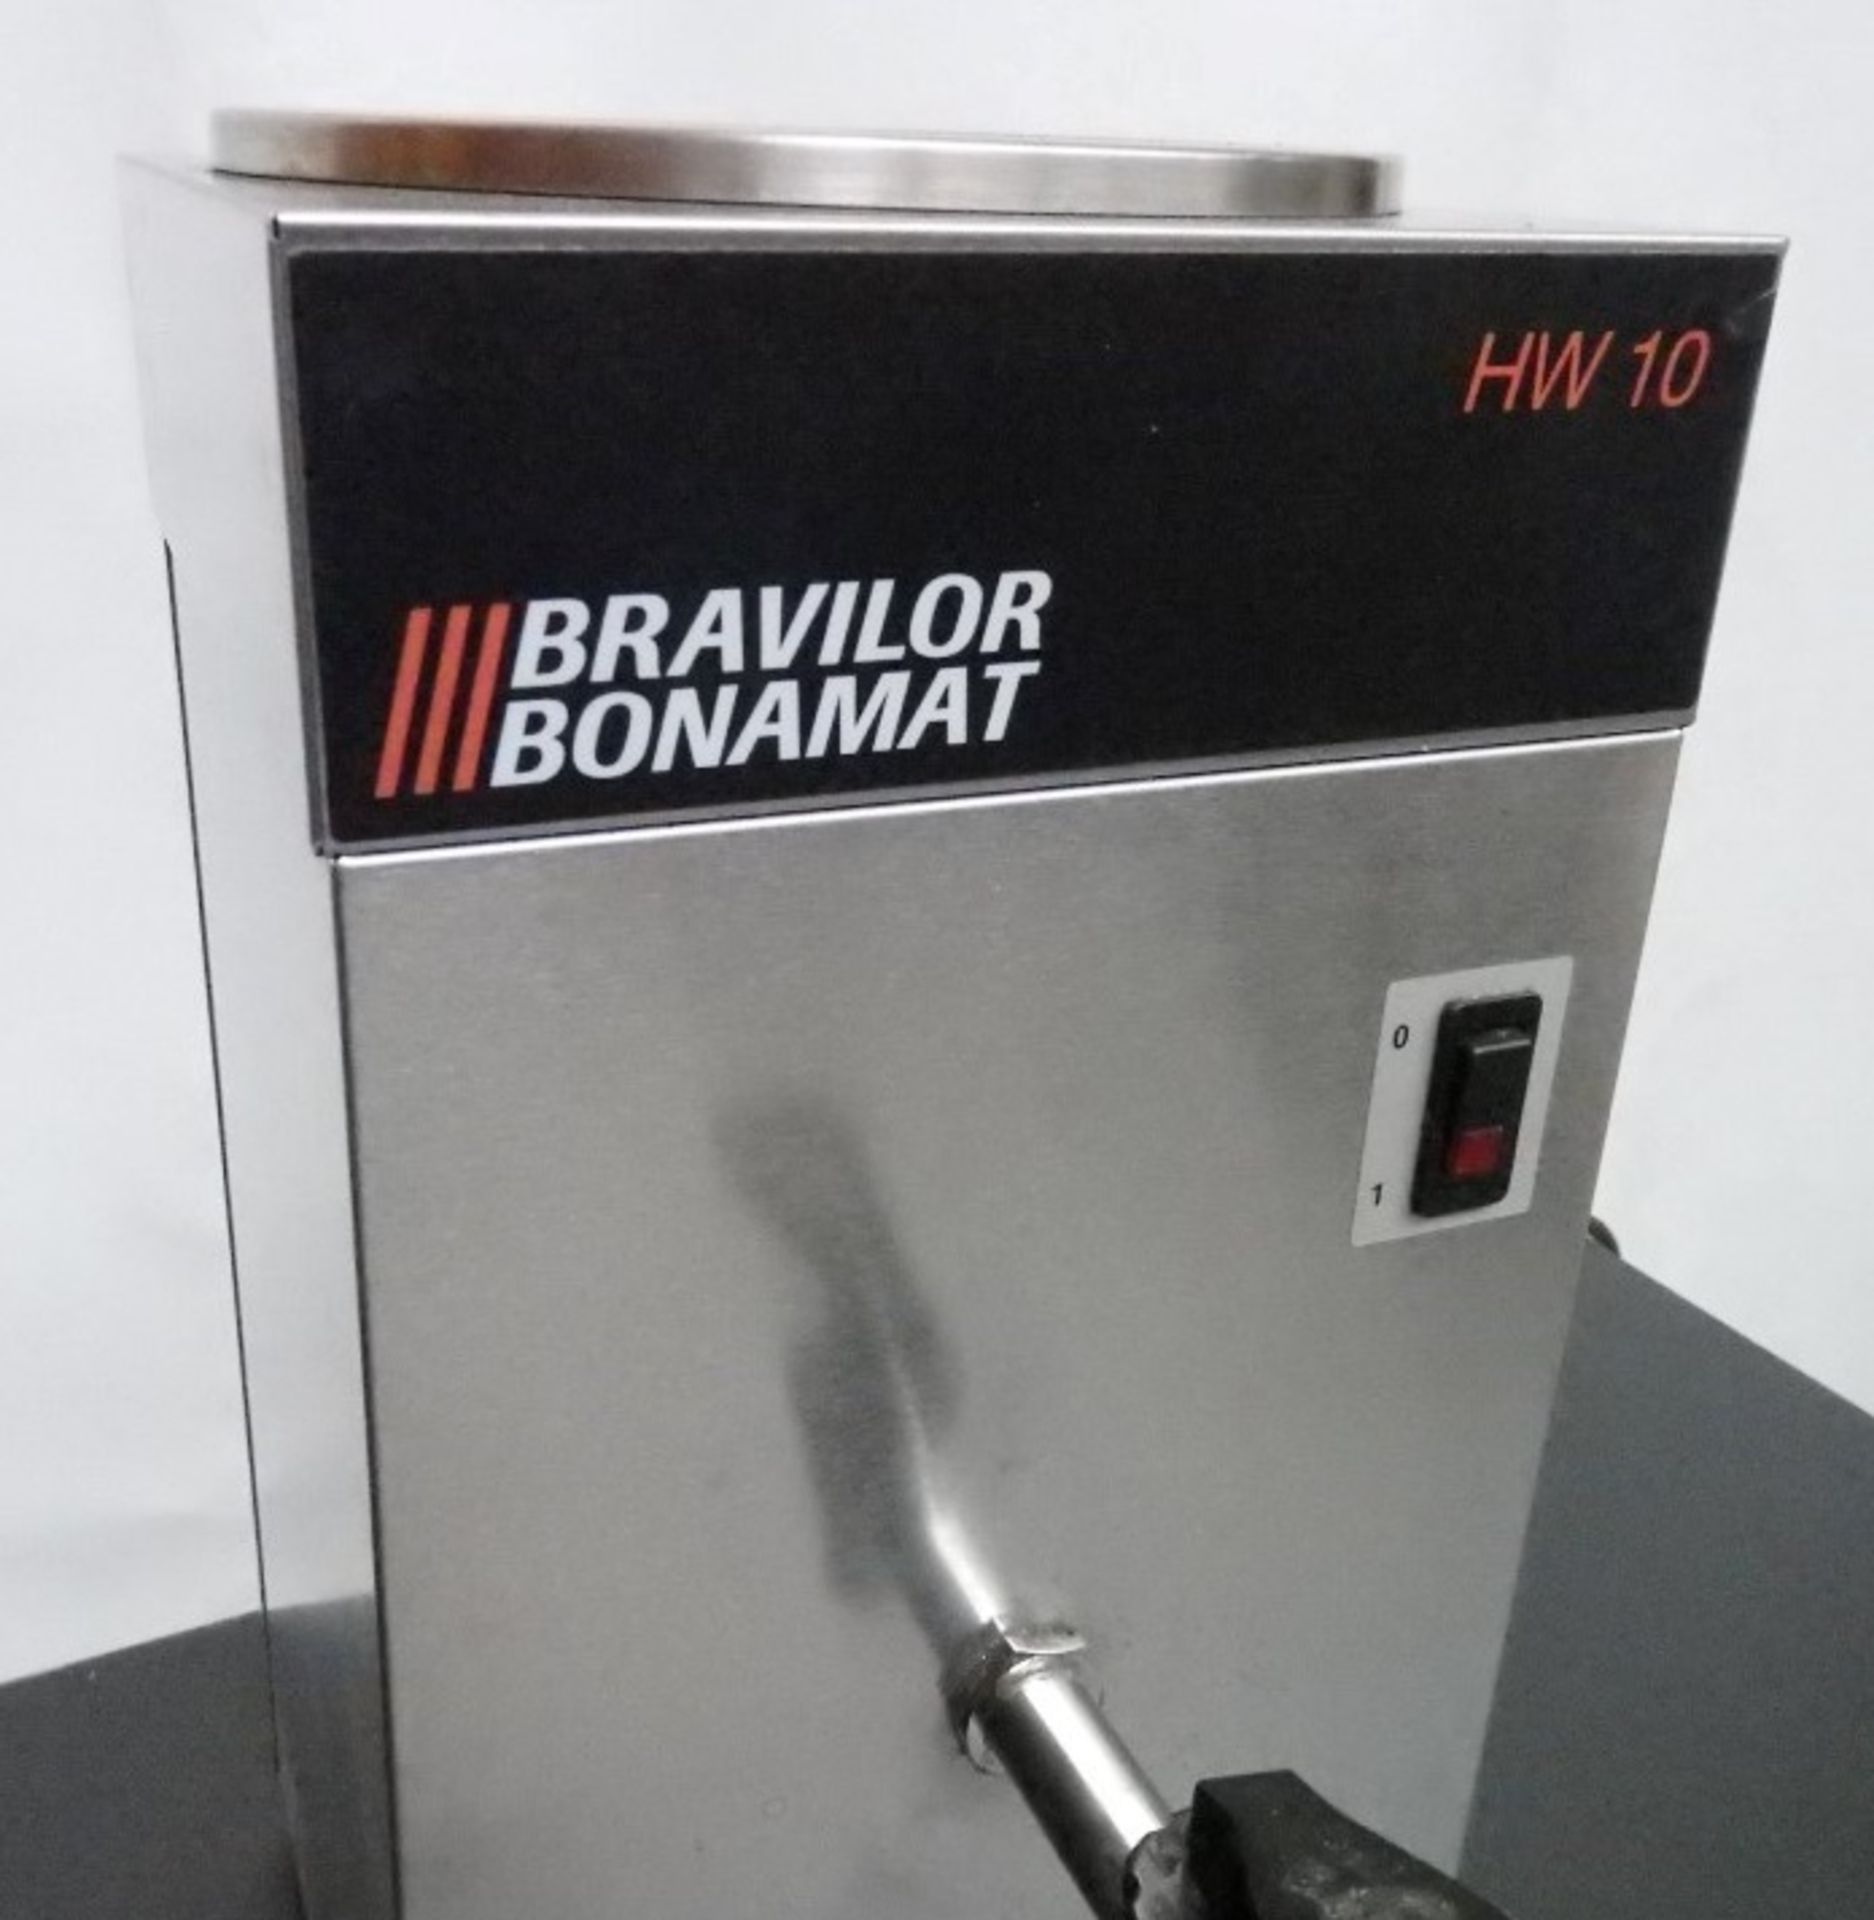 1 x Bravilor HW10 Commercial Hot Water Dispenser 2Ltr - Dimensions 43(H) x 20.5(W) x 35.5(D)cm - - Image 3 of 7